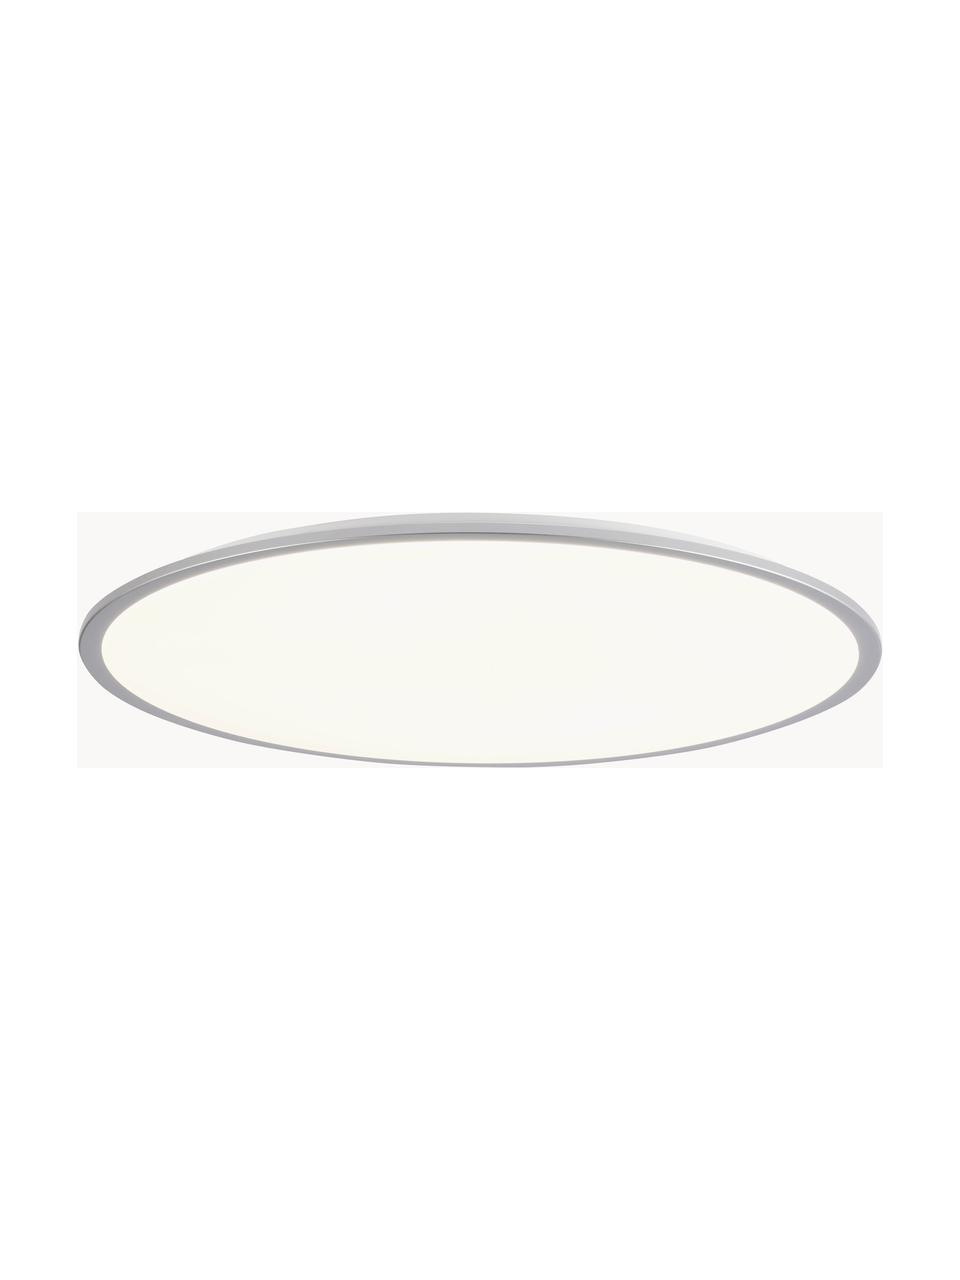 Dimbare LED paneel Jamil met afstandsbediening, Lampenkap: kunststof, Wit, zilverkleurig, Ø 58 x H 9 cm